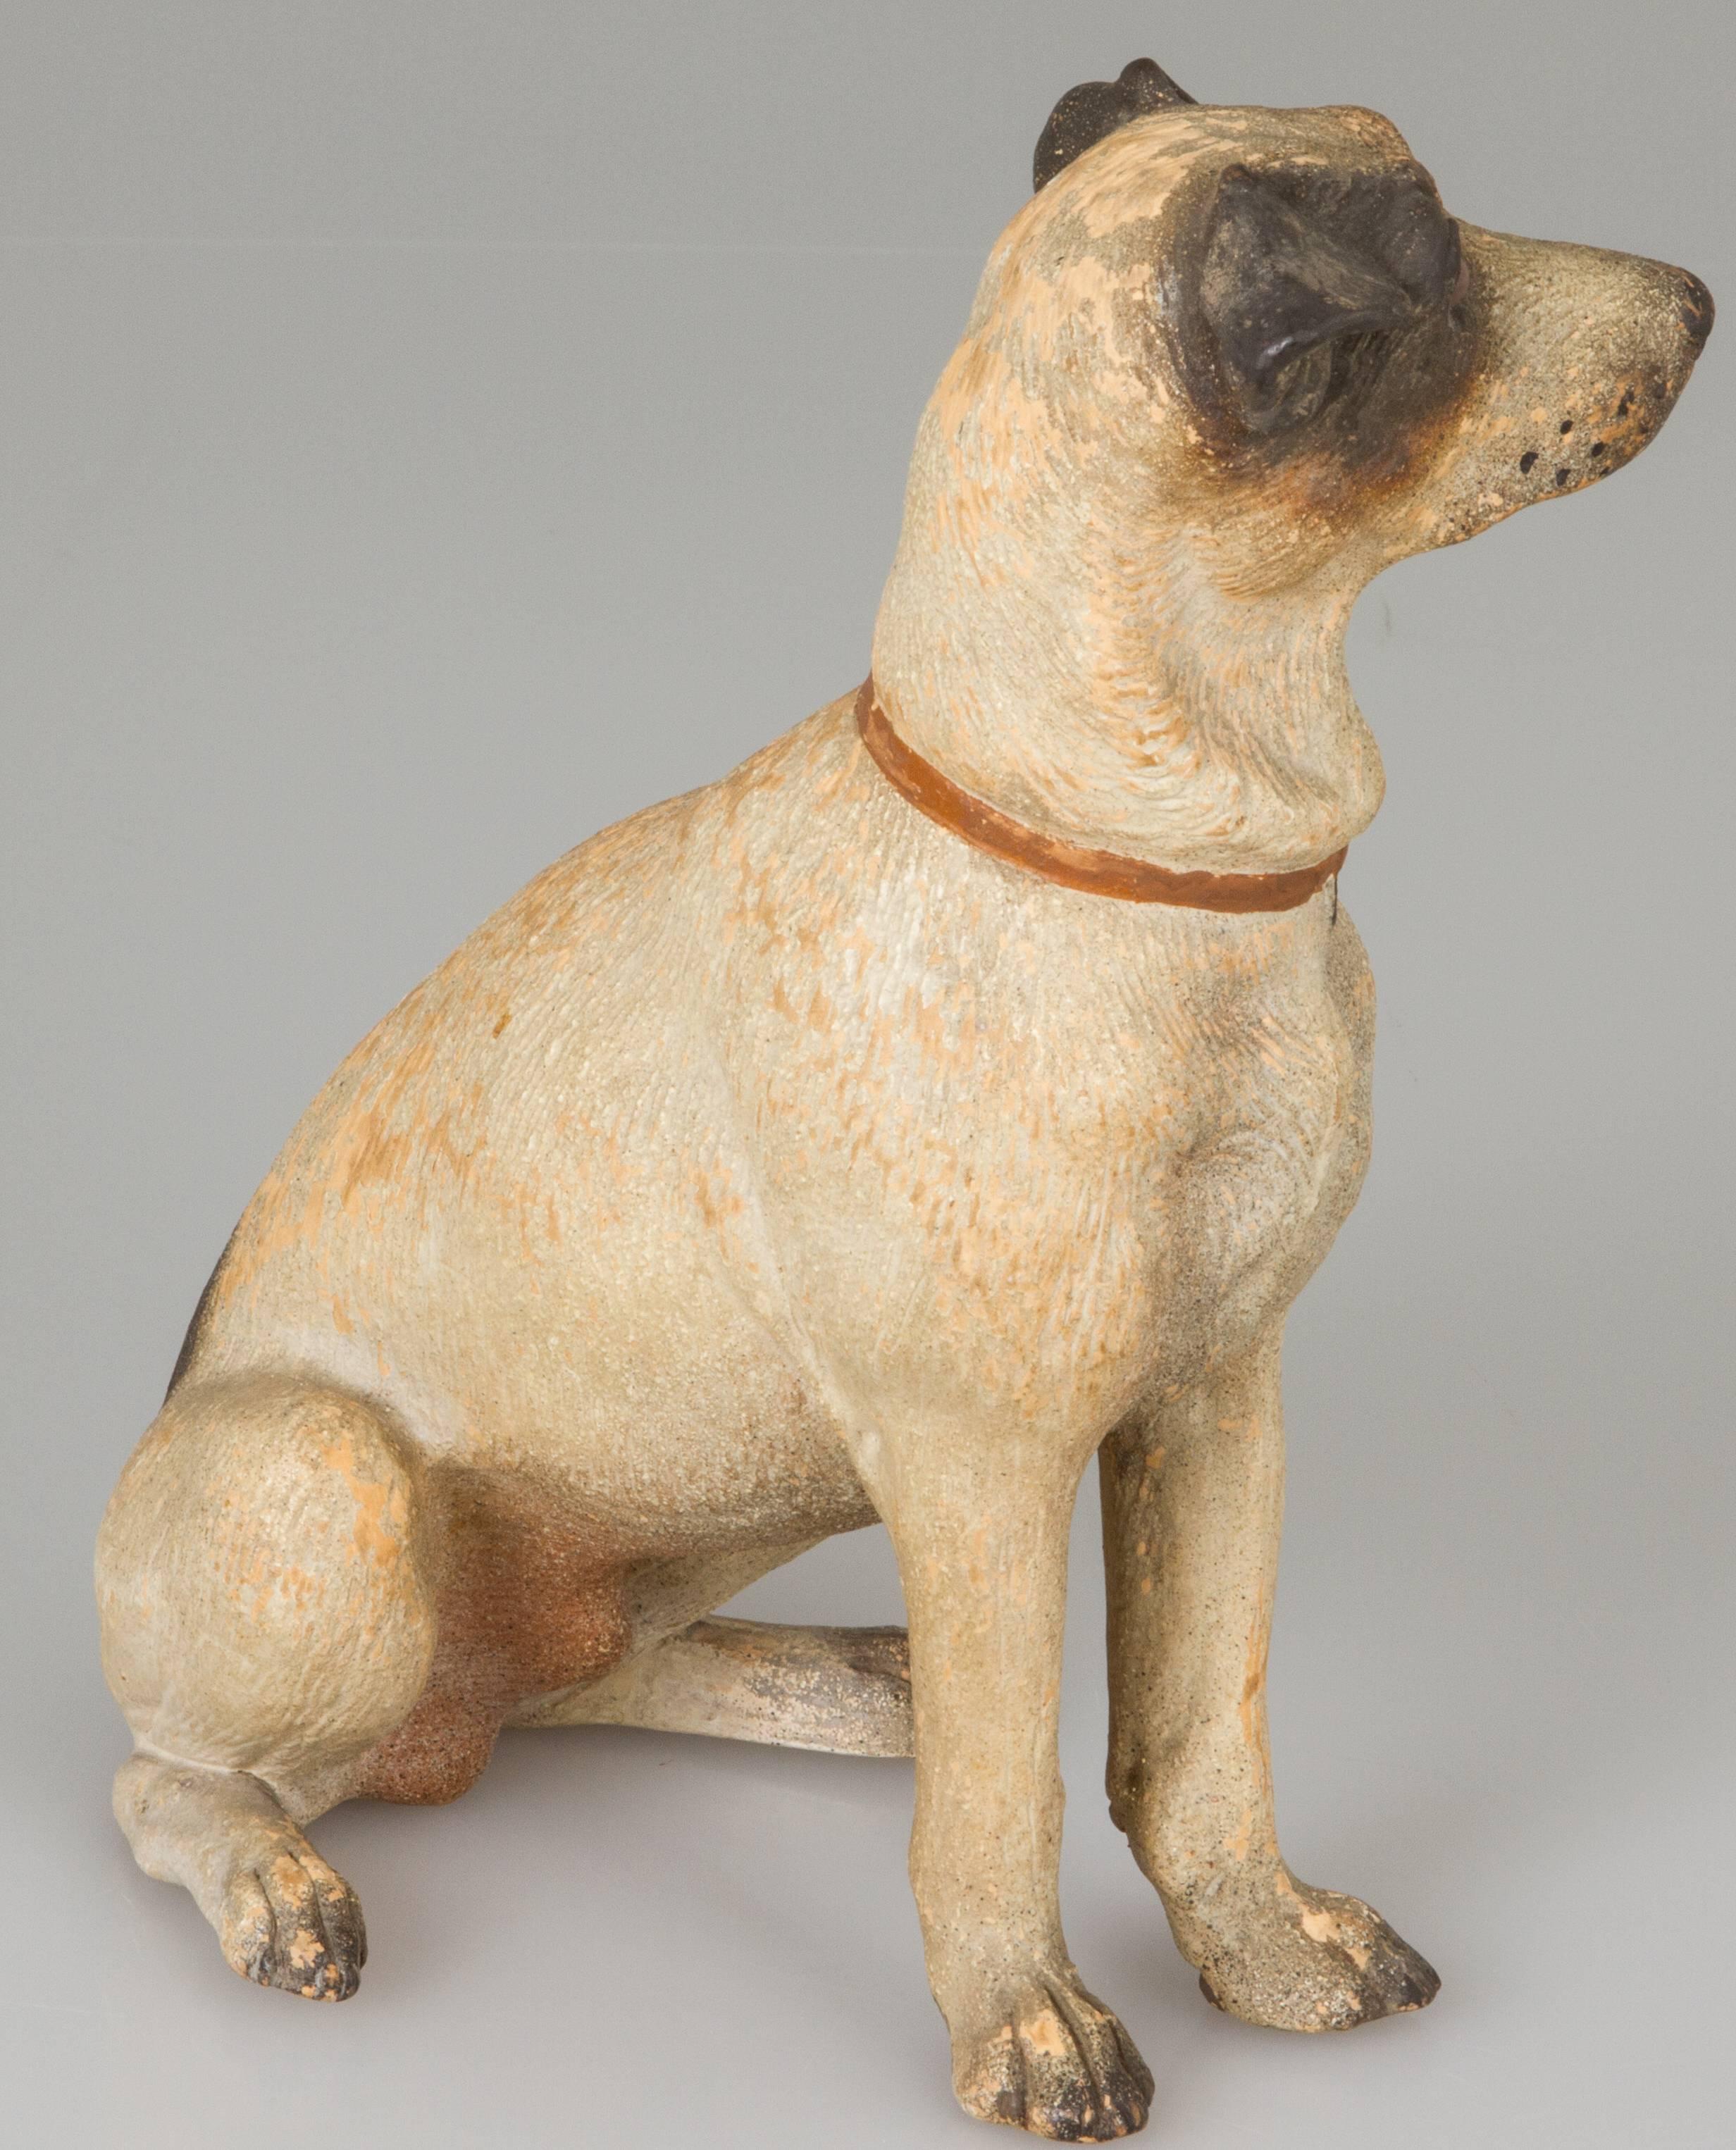 Terracotta Ceramic Sculpture of a Terrier